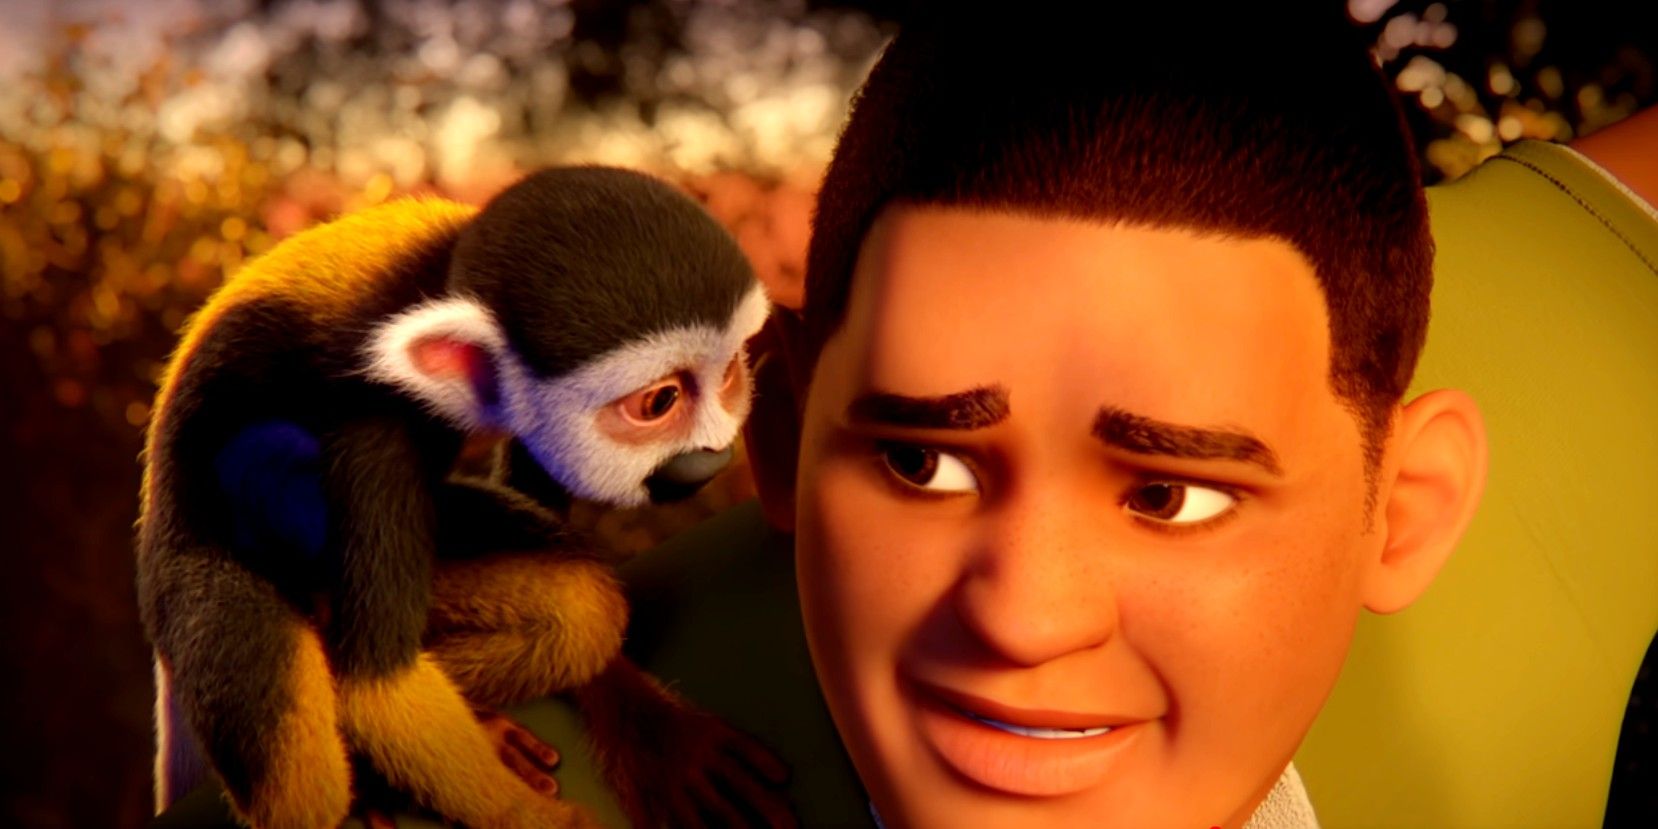 Cisco smiling at his pet monkey Donut